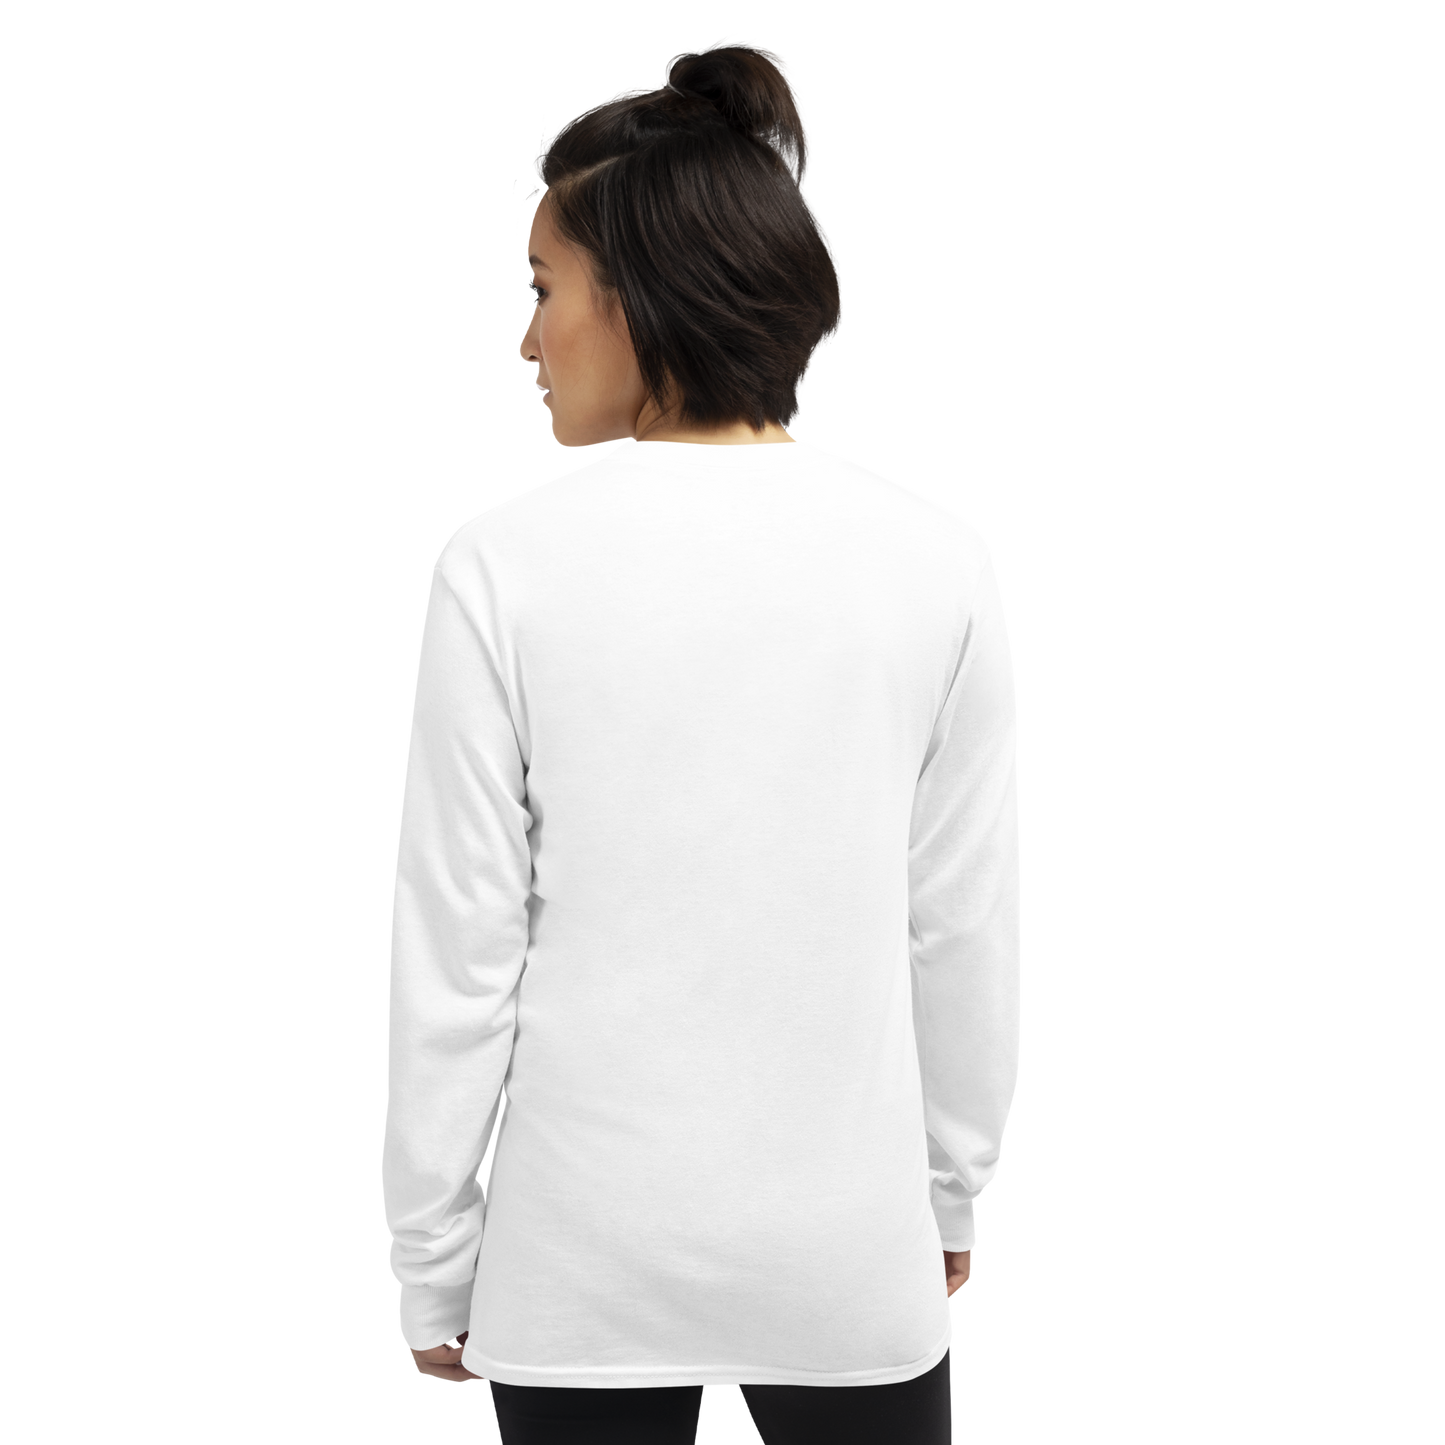 Long Sleeve Shirt - Discreet V1.0 - White - Premium